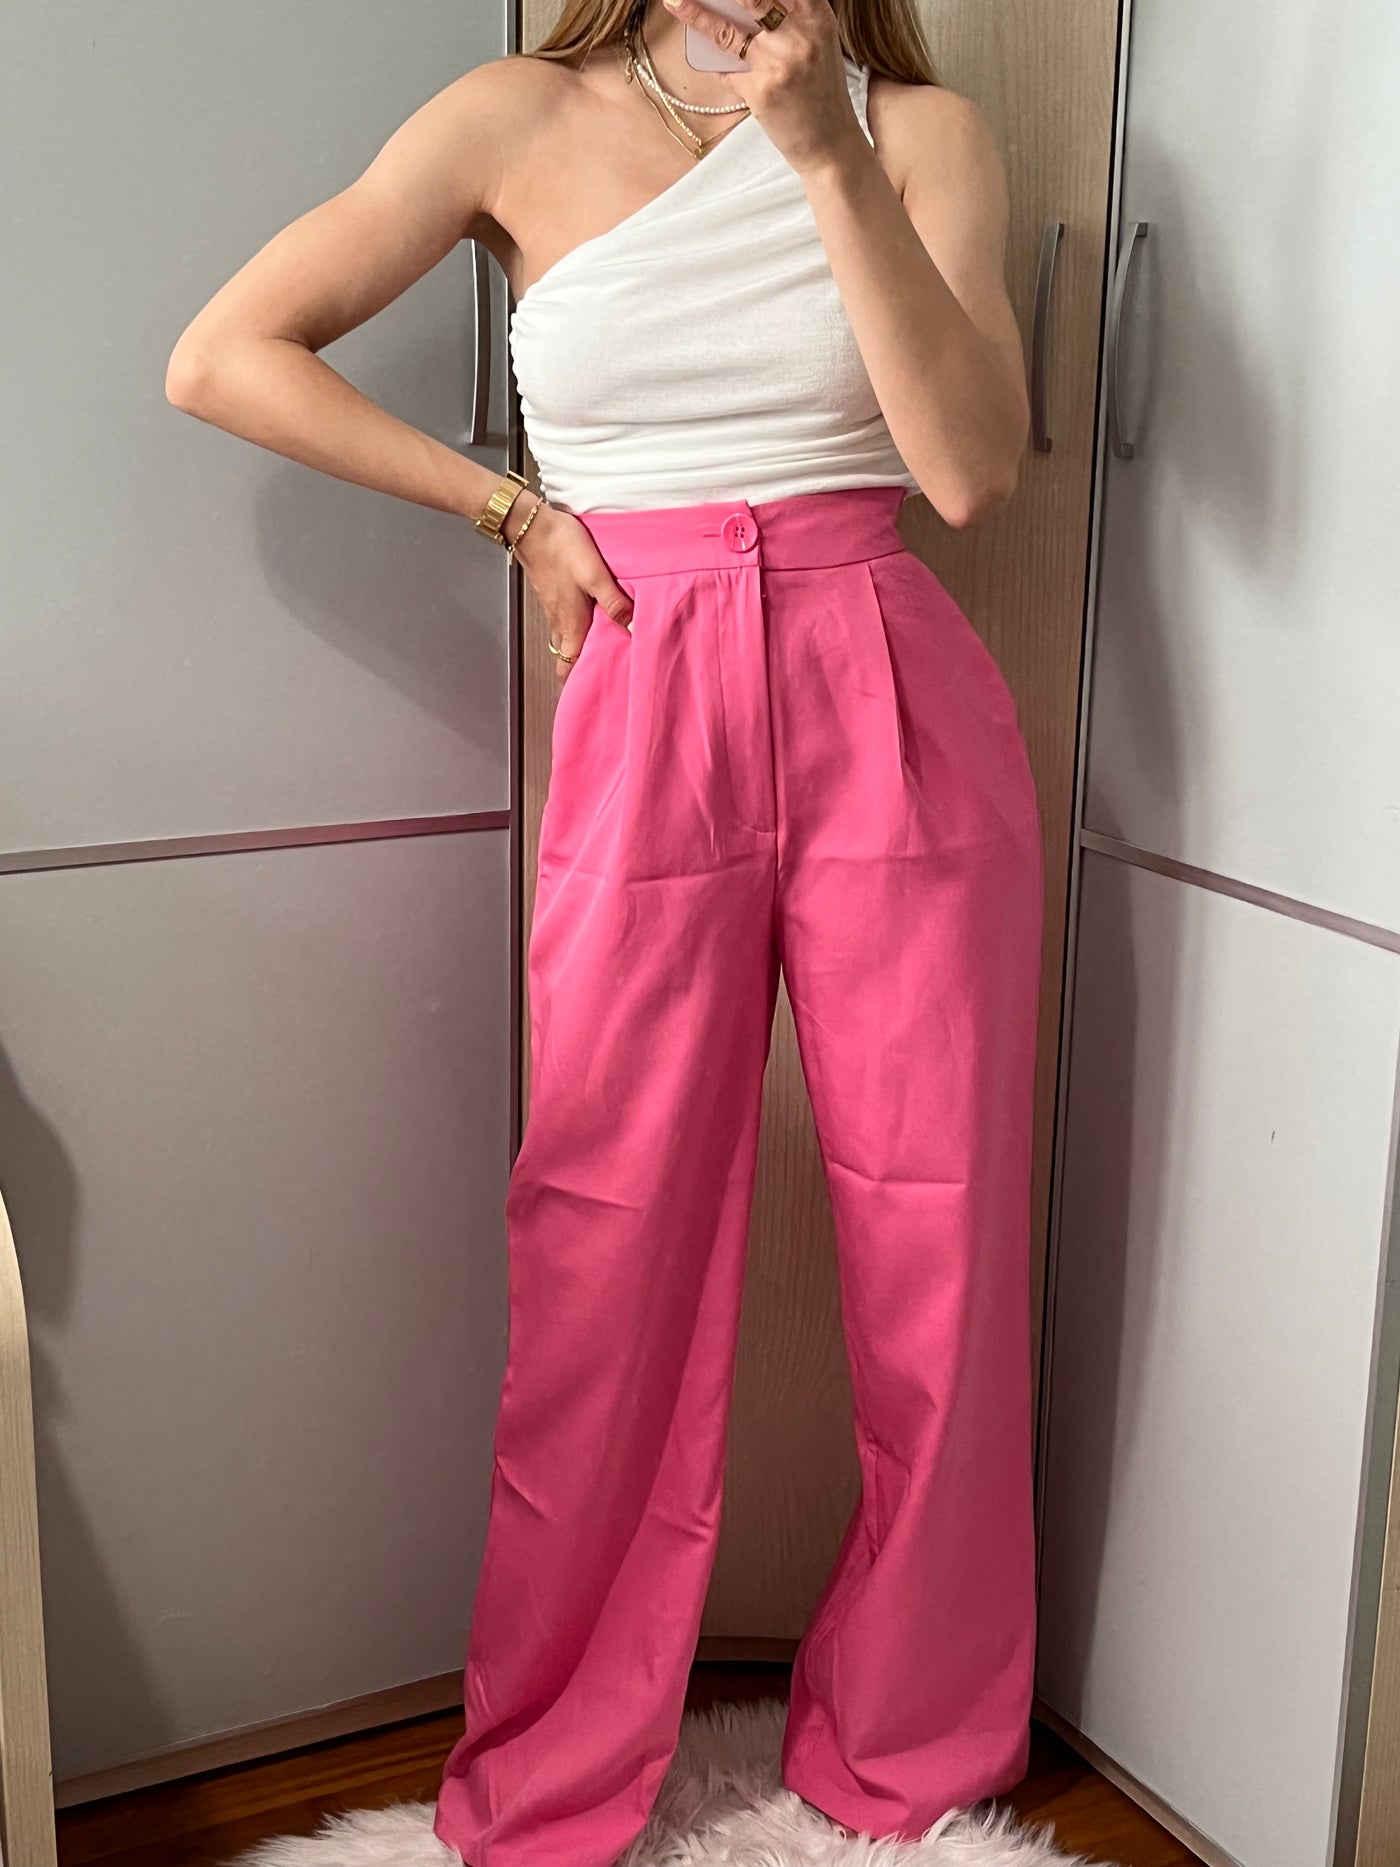 Pantalones rosas traje